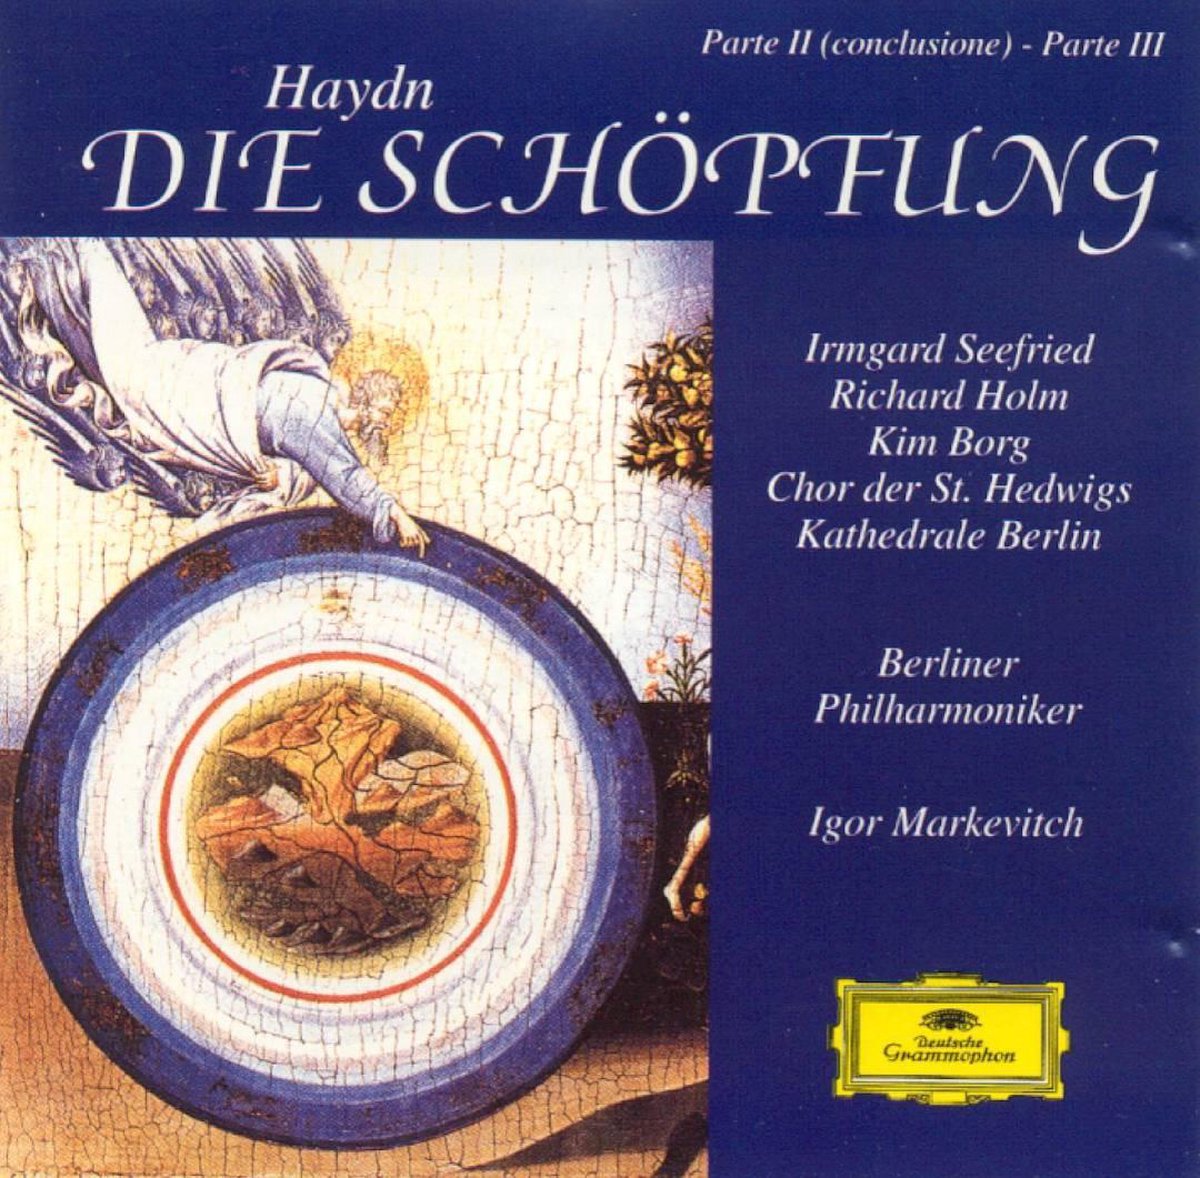 Haydn: Die Schöpfung (Parte II (conclusione) - Parte III) - Igor Markevitch